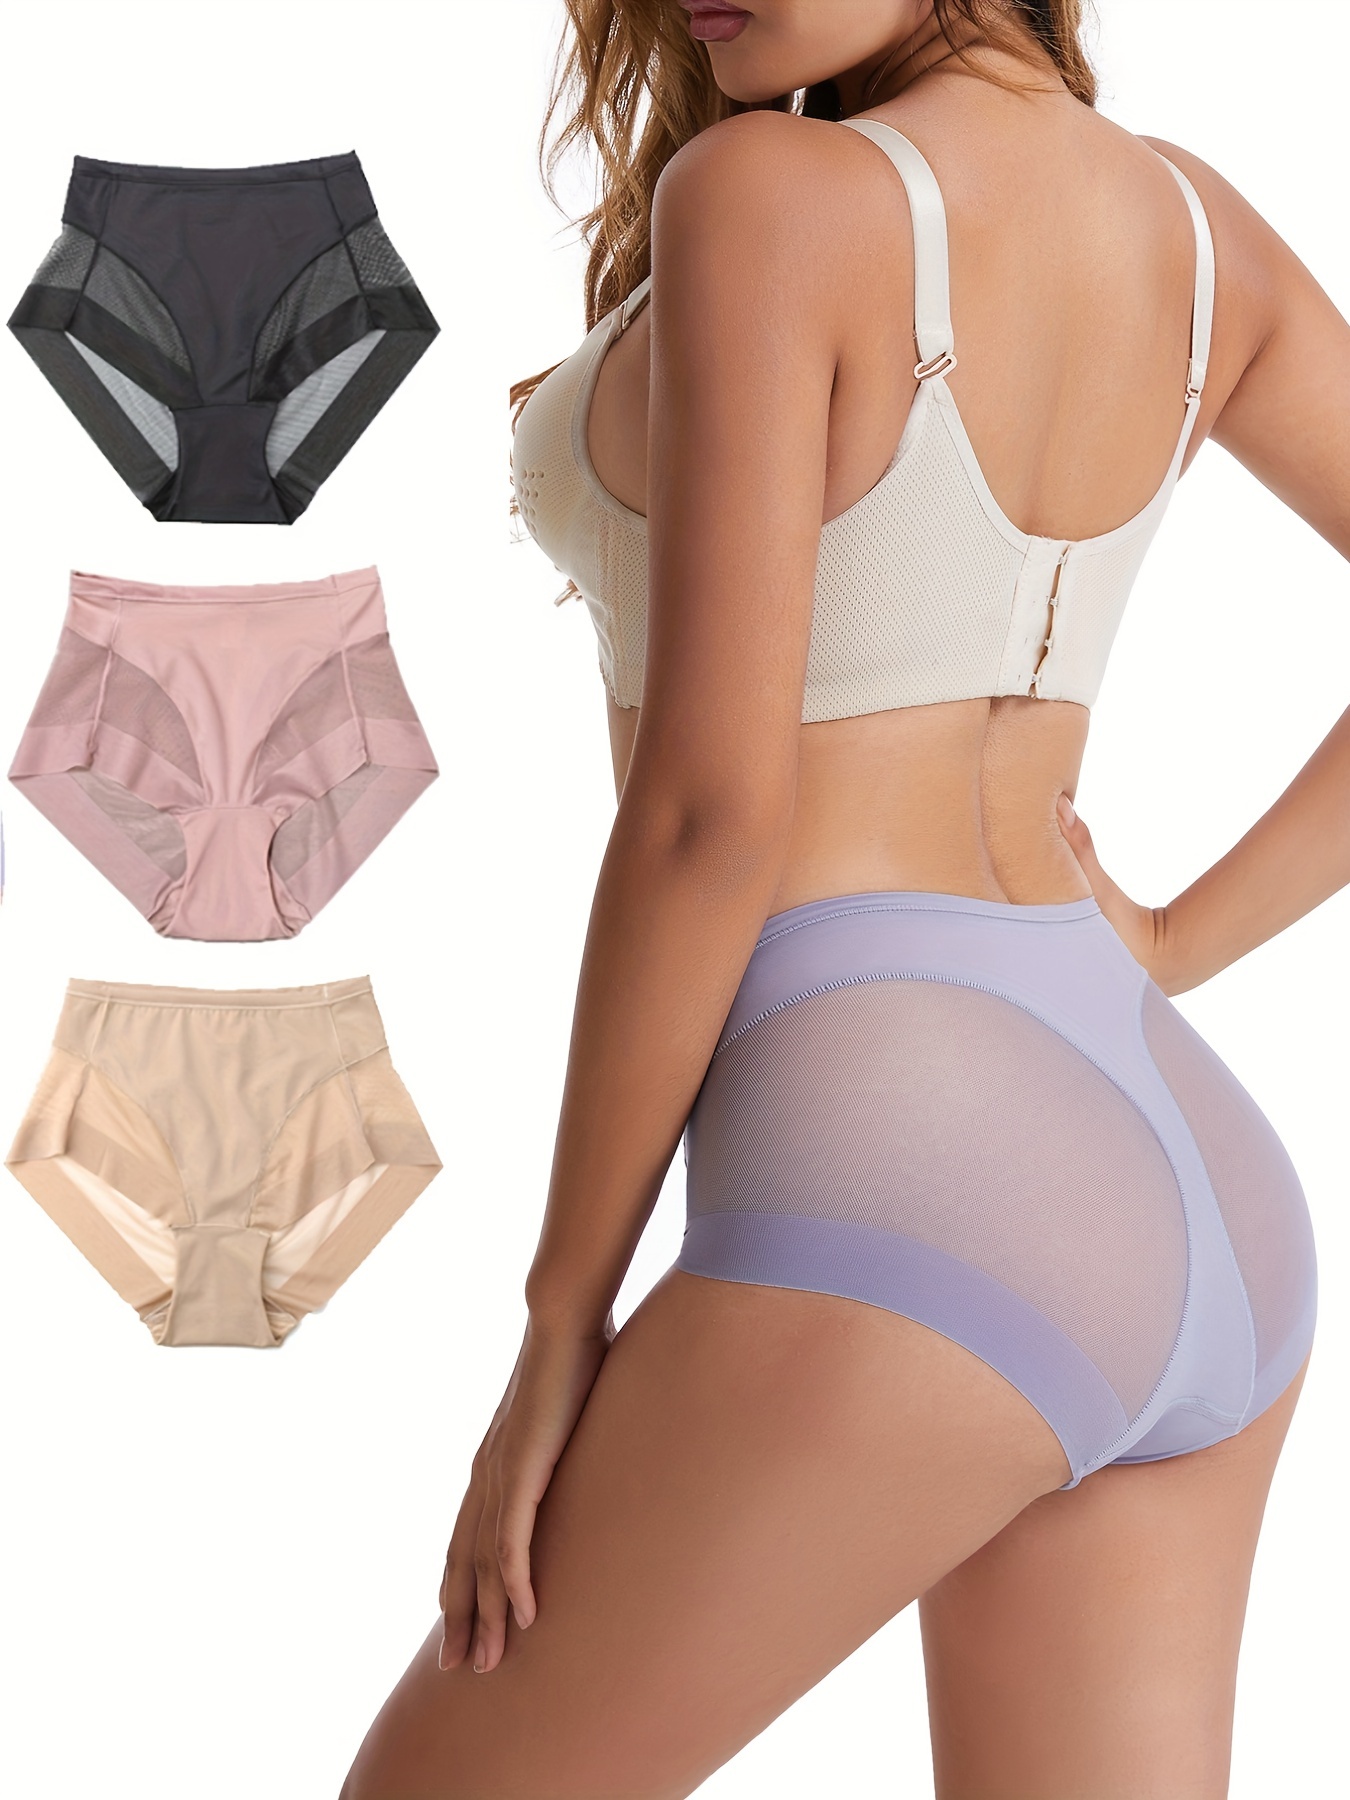 Nylon Bikini Crotchless Panties in Semi Sheer Fabric -  Canada